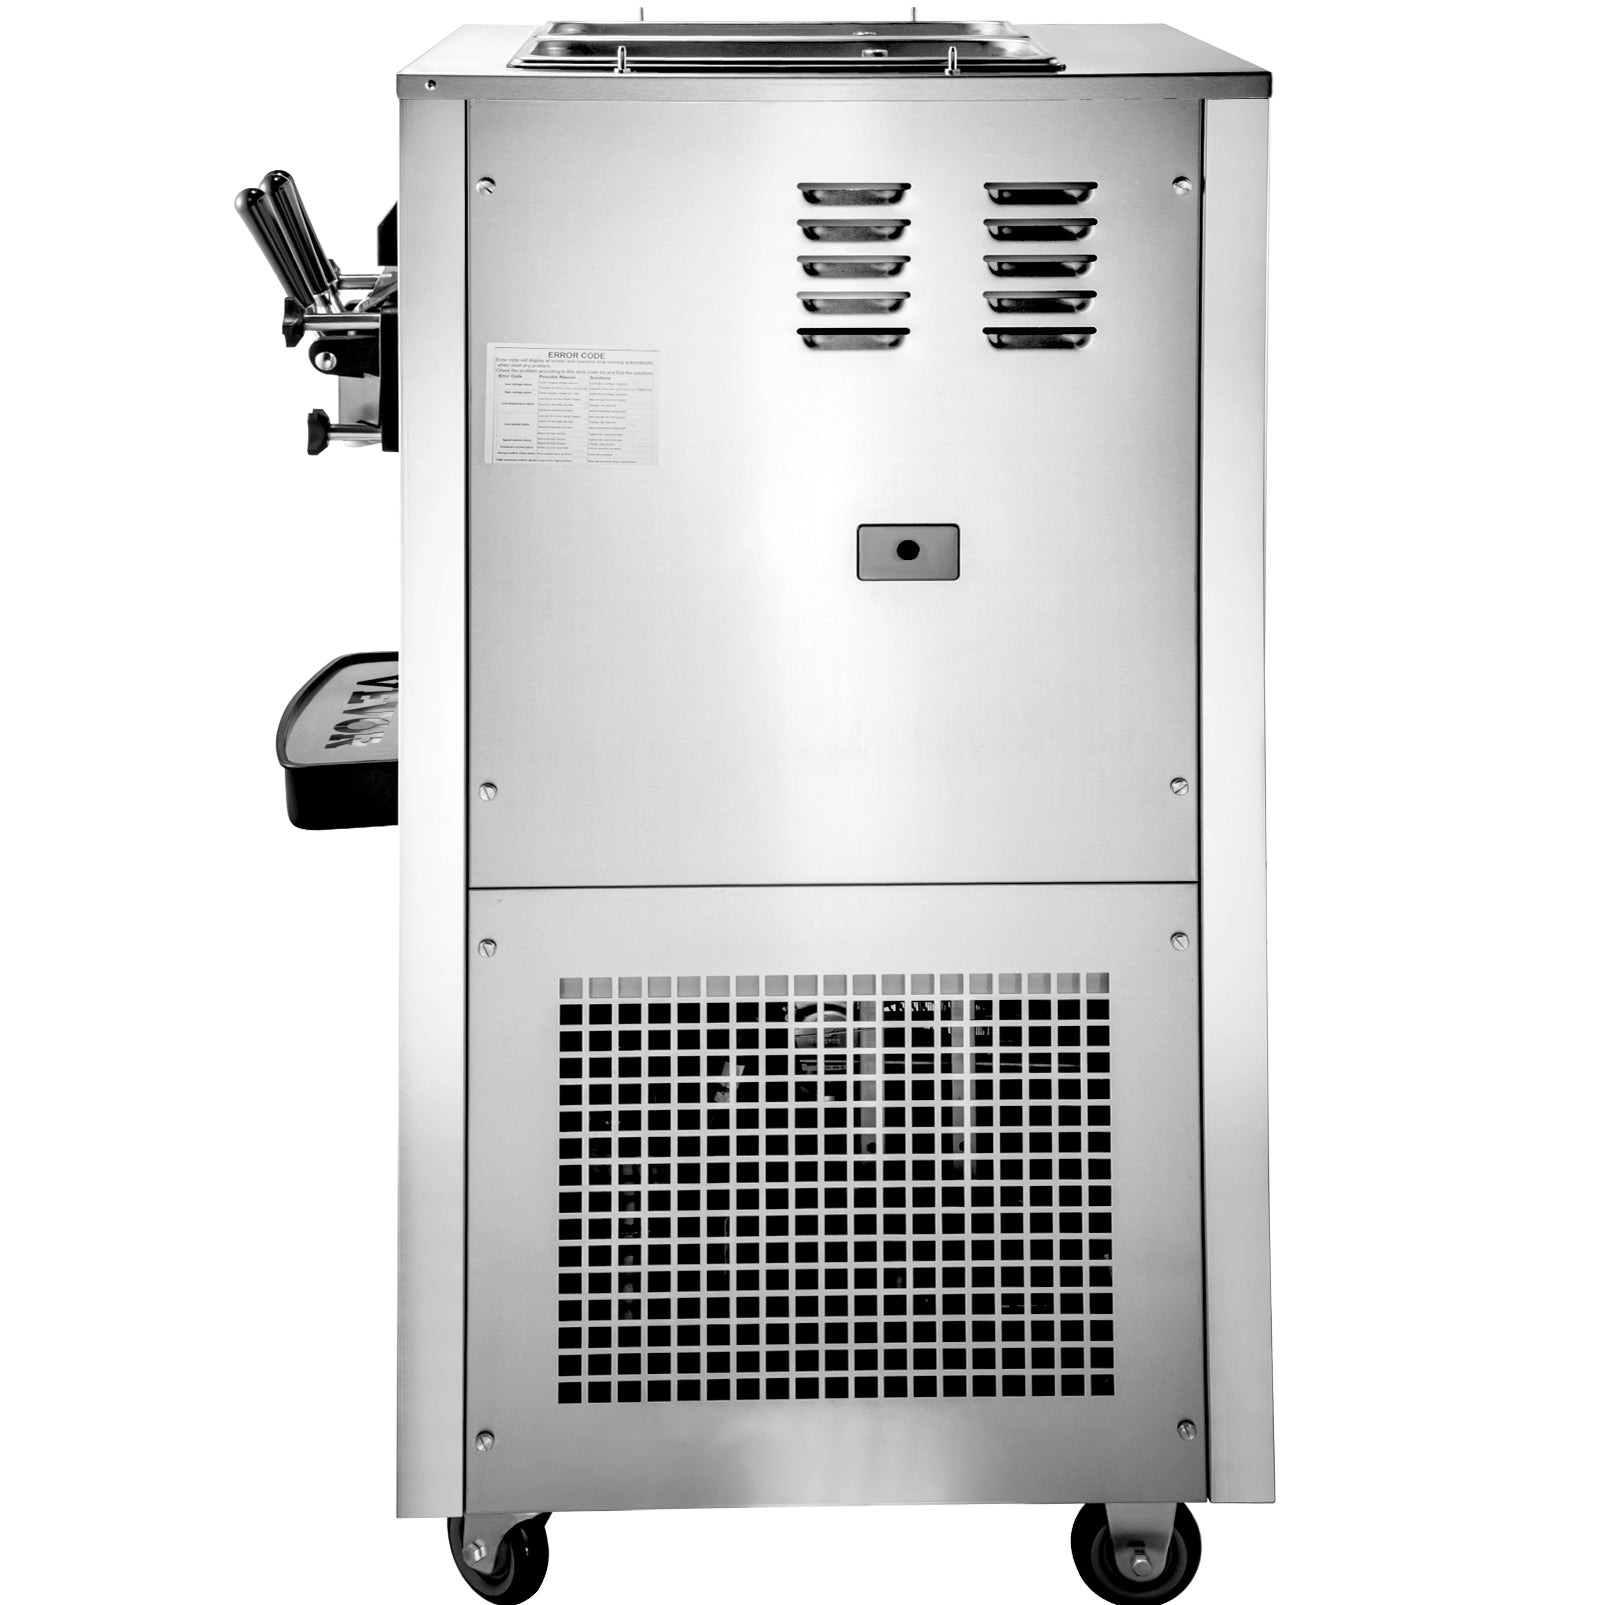 Vevor Commercial Ice Cream Machine Soft Serve Machine 3 Flavors Ice Cr